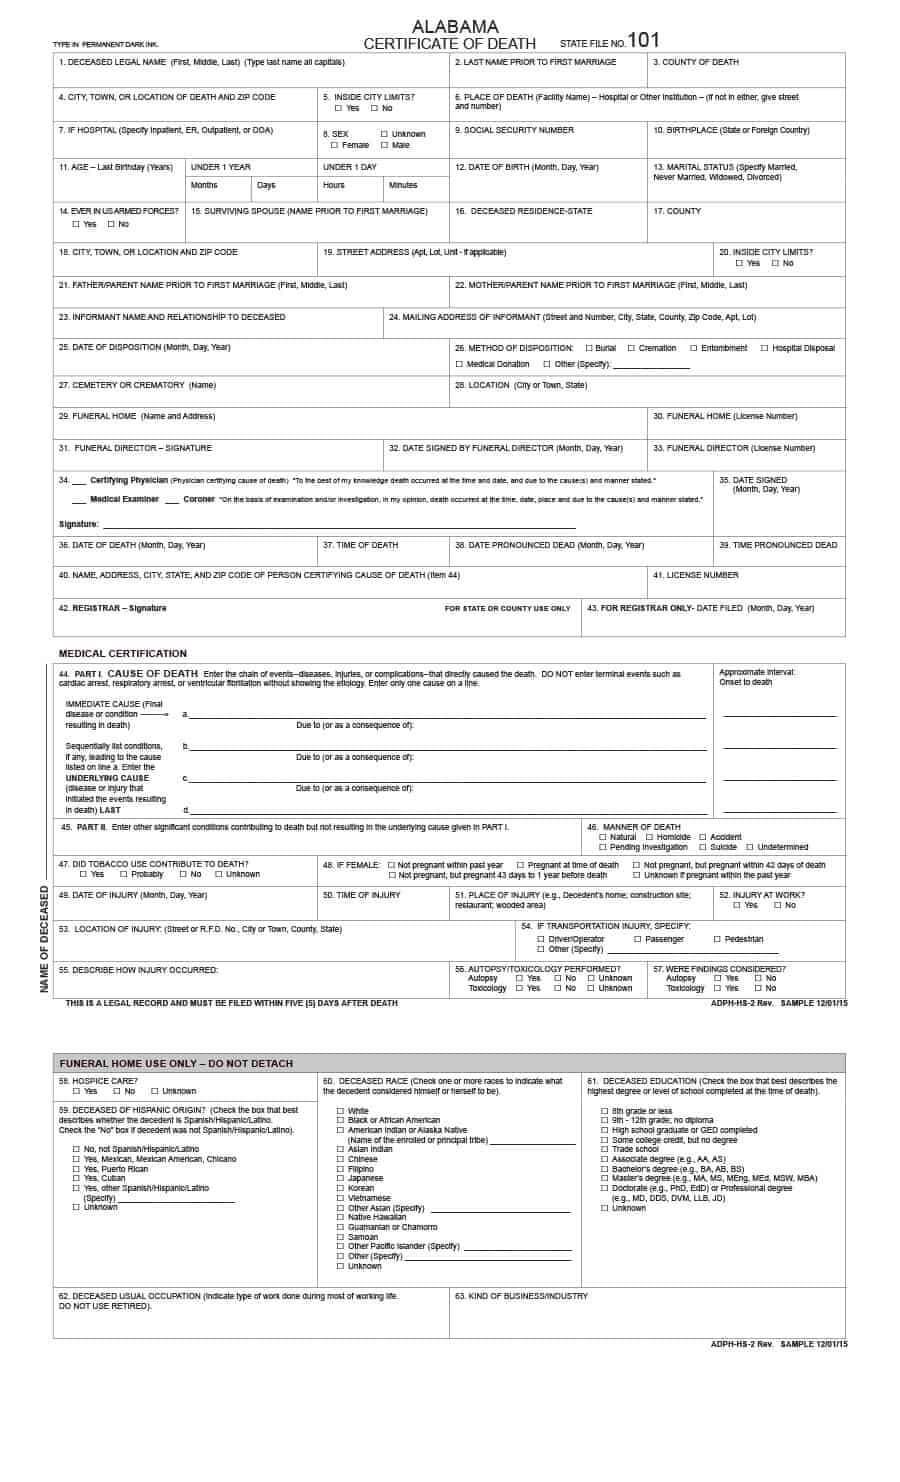 37 Blank Death Certificate Templates [100% Free] ᐅ Templatelab For Birth Certificate Fake Template